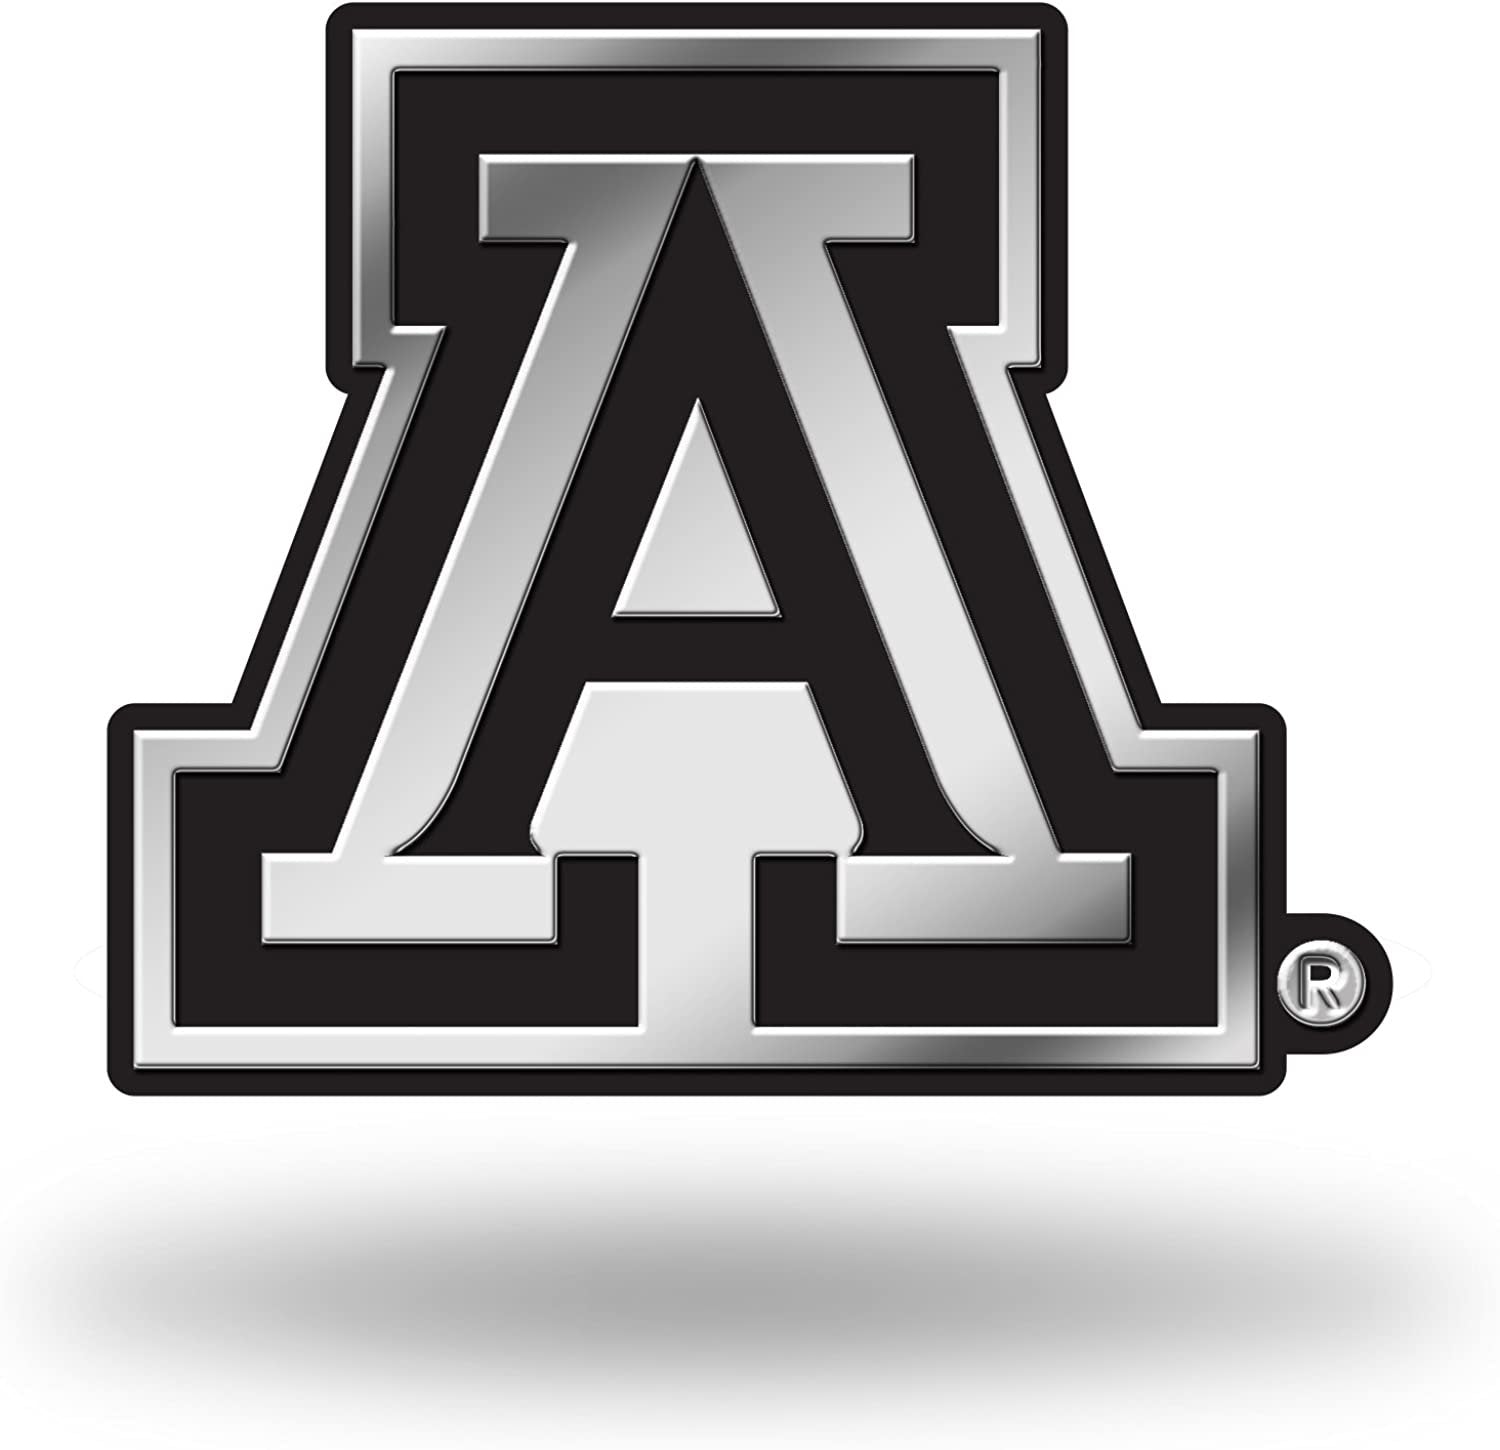 University of Arizona Wildcats Auto Emblem, Silver Chrome Color, Raised Molded Plastic, 3.5 Inch, Adhesive Tape Backing